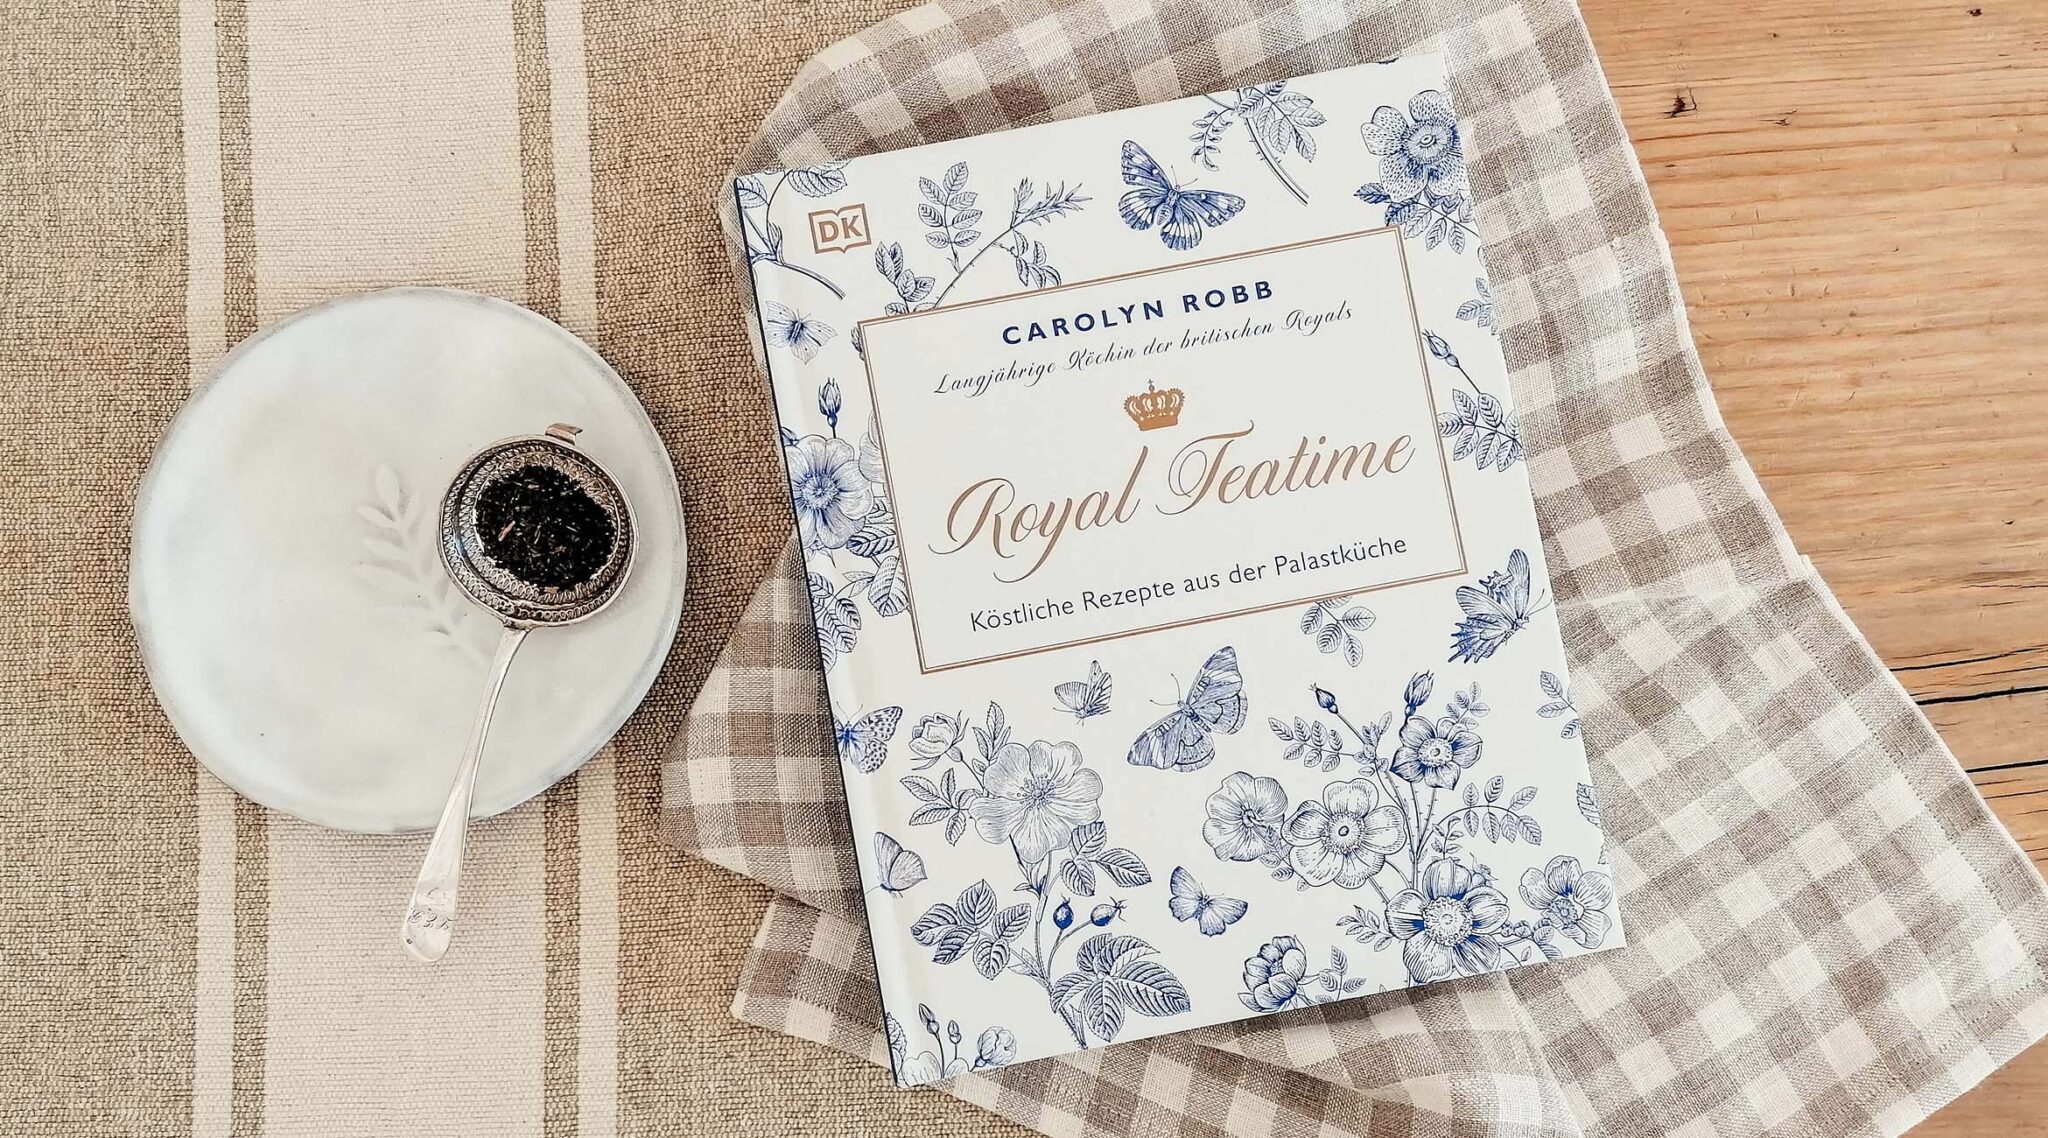 Royal Teatime: Original Rezepte aus der Palastküche